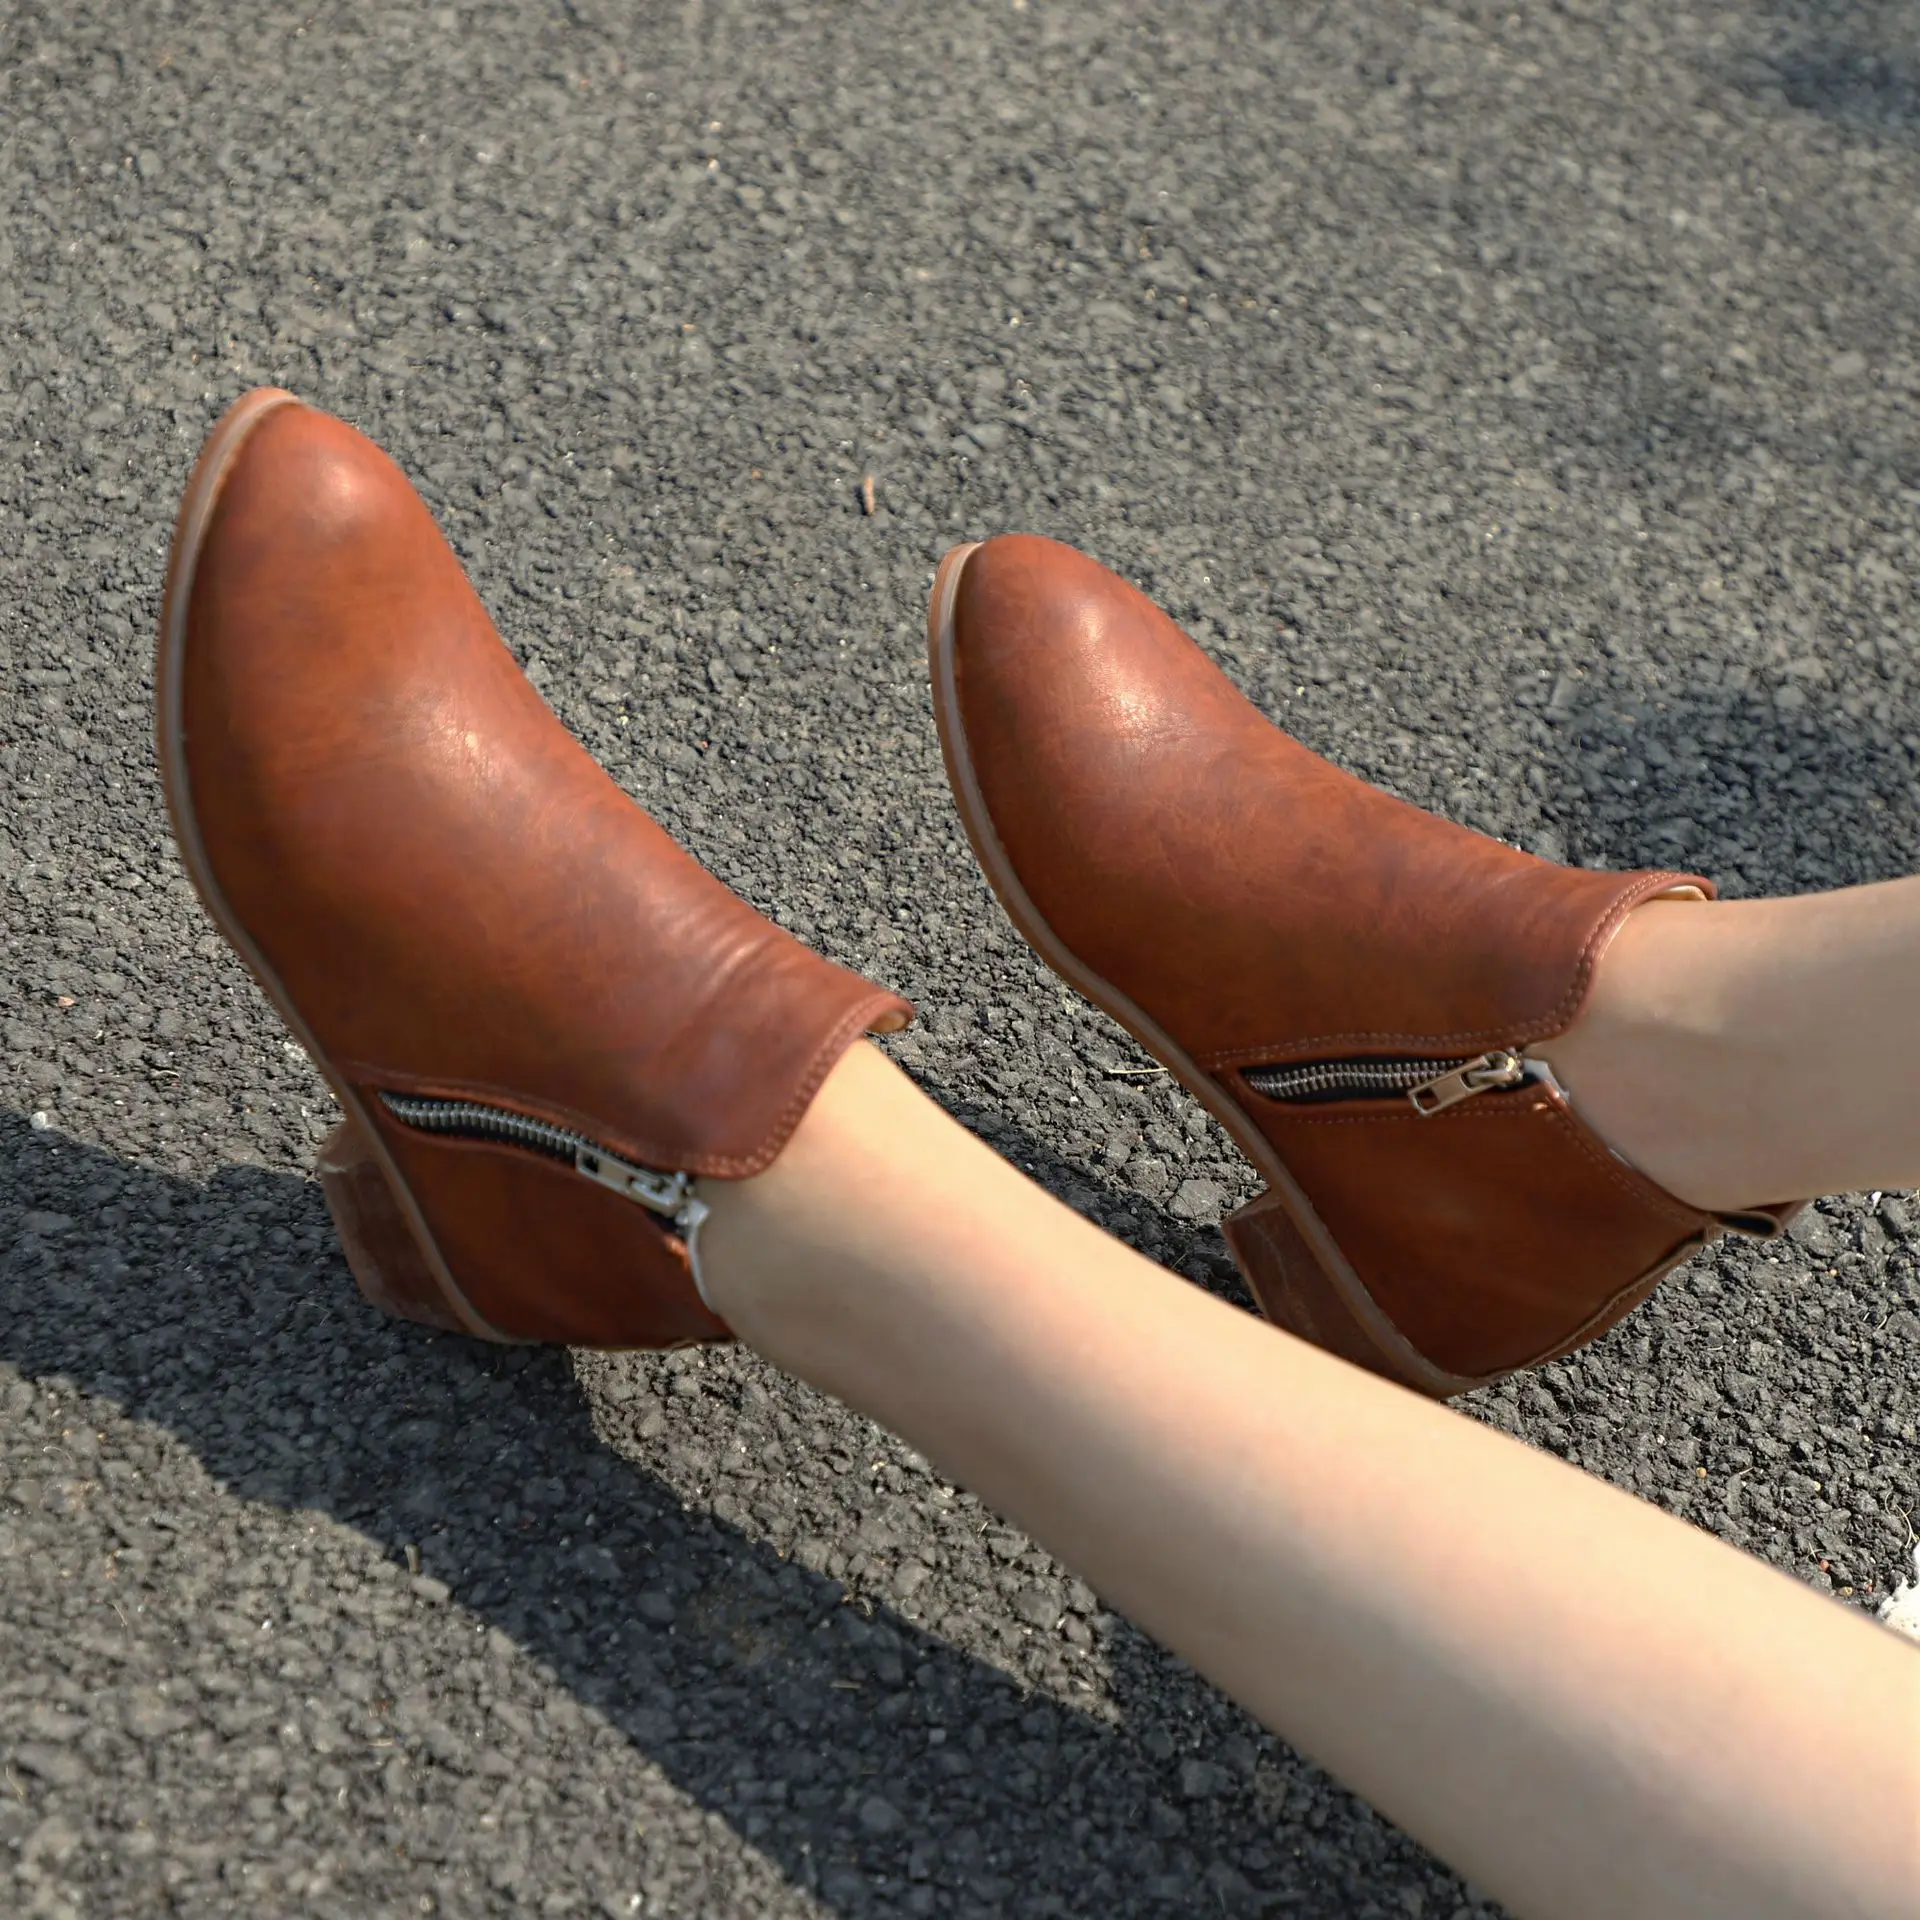 Chaussure/Женская обувь; сезон весна-осень; женская обувь; zapatos mujer Sapato; ботильоны для девочек; ботинки на низком квадратном массивном каблуке; 556